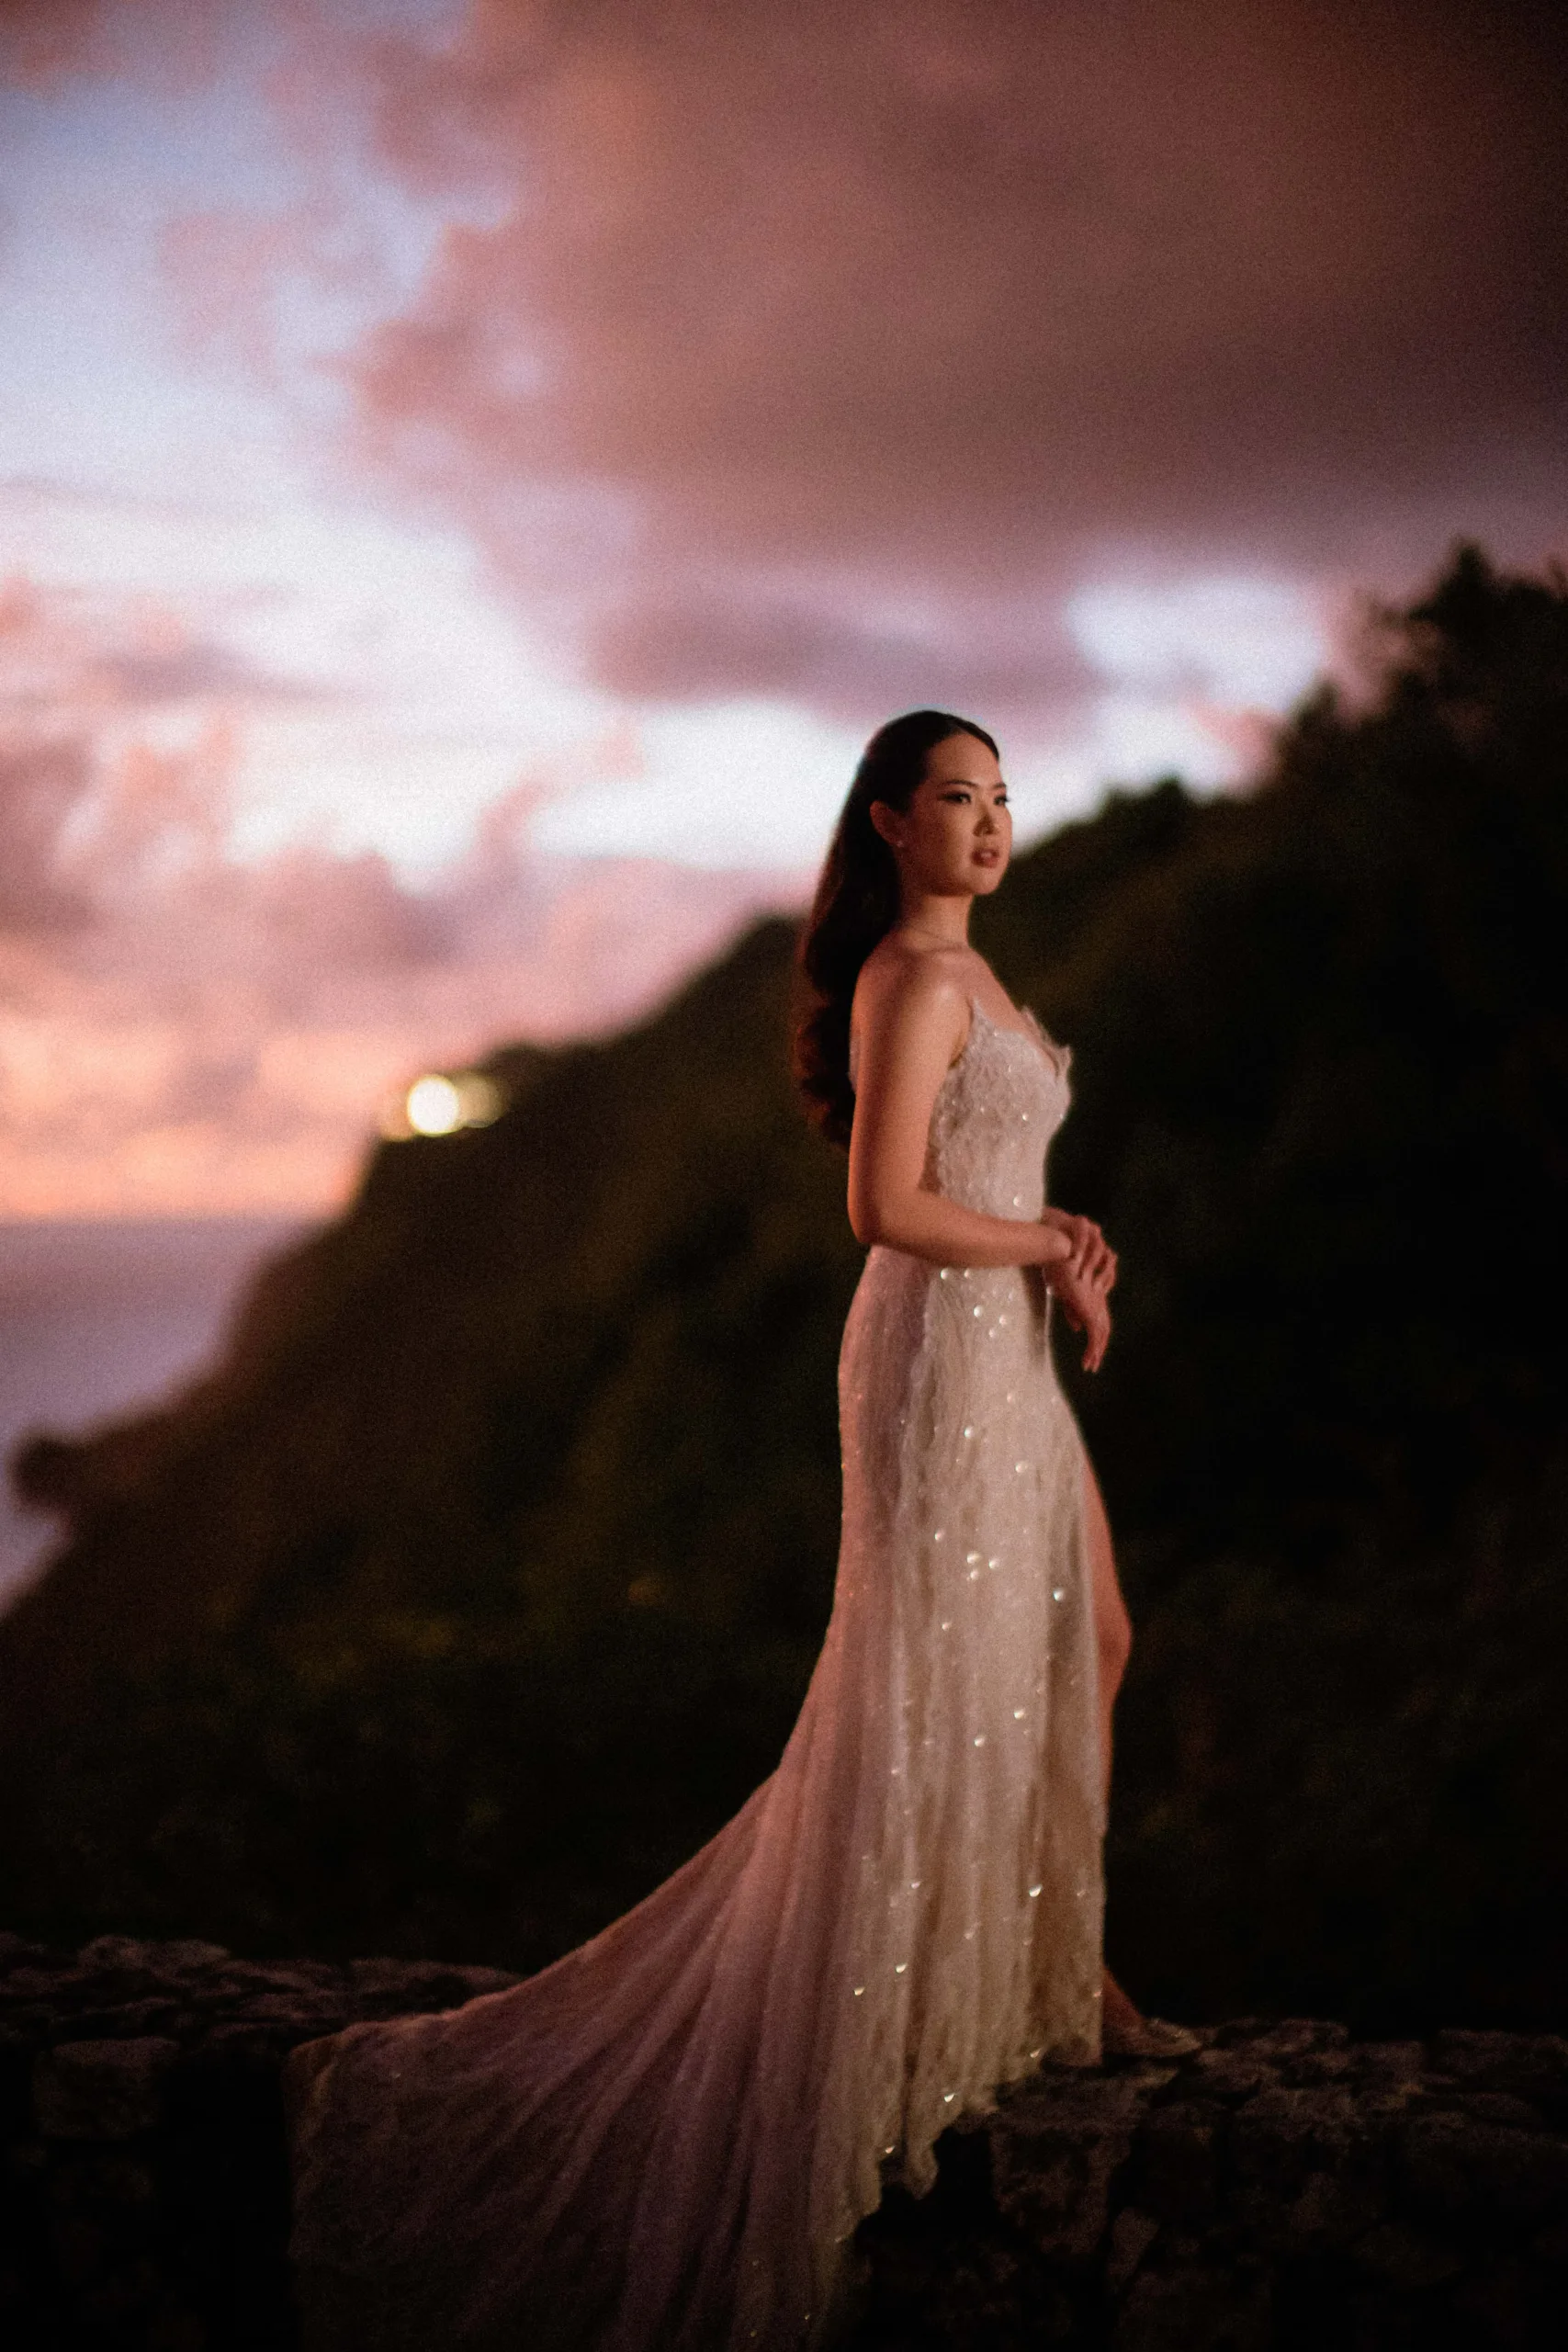 Portrait of bride during sunset